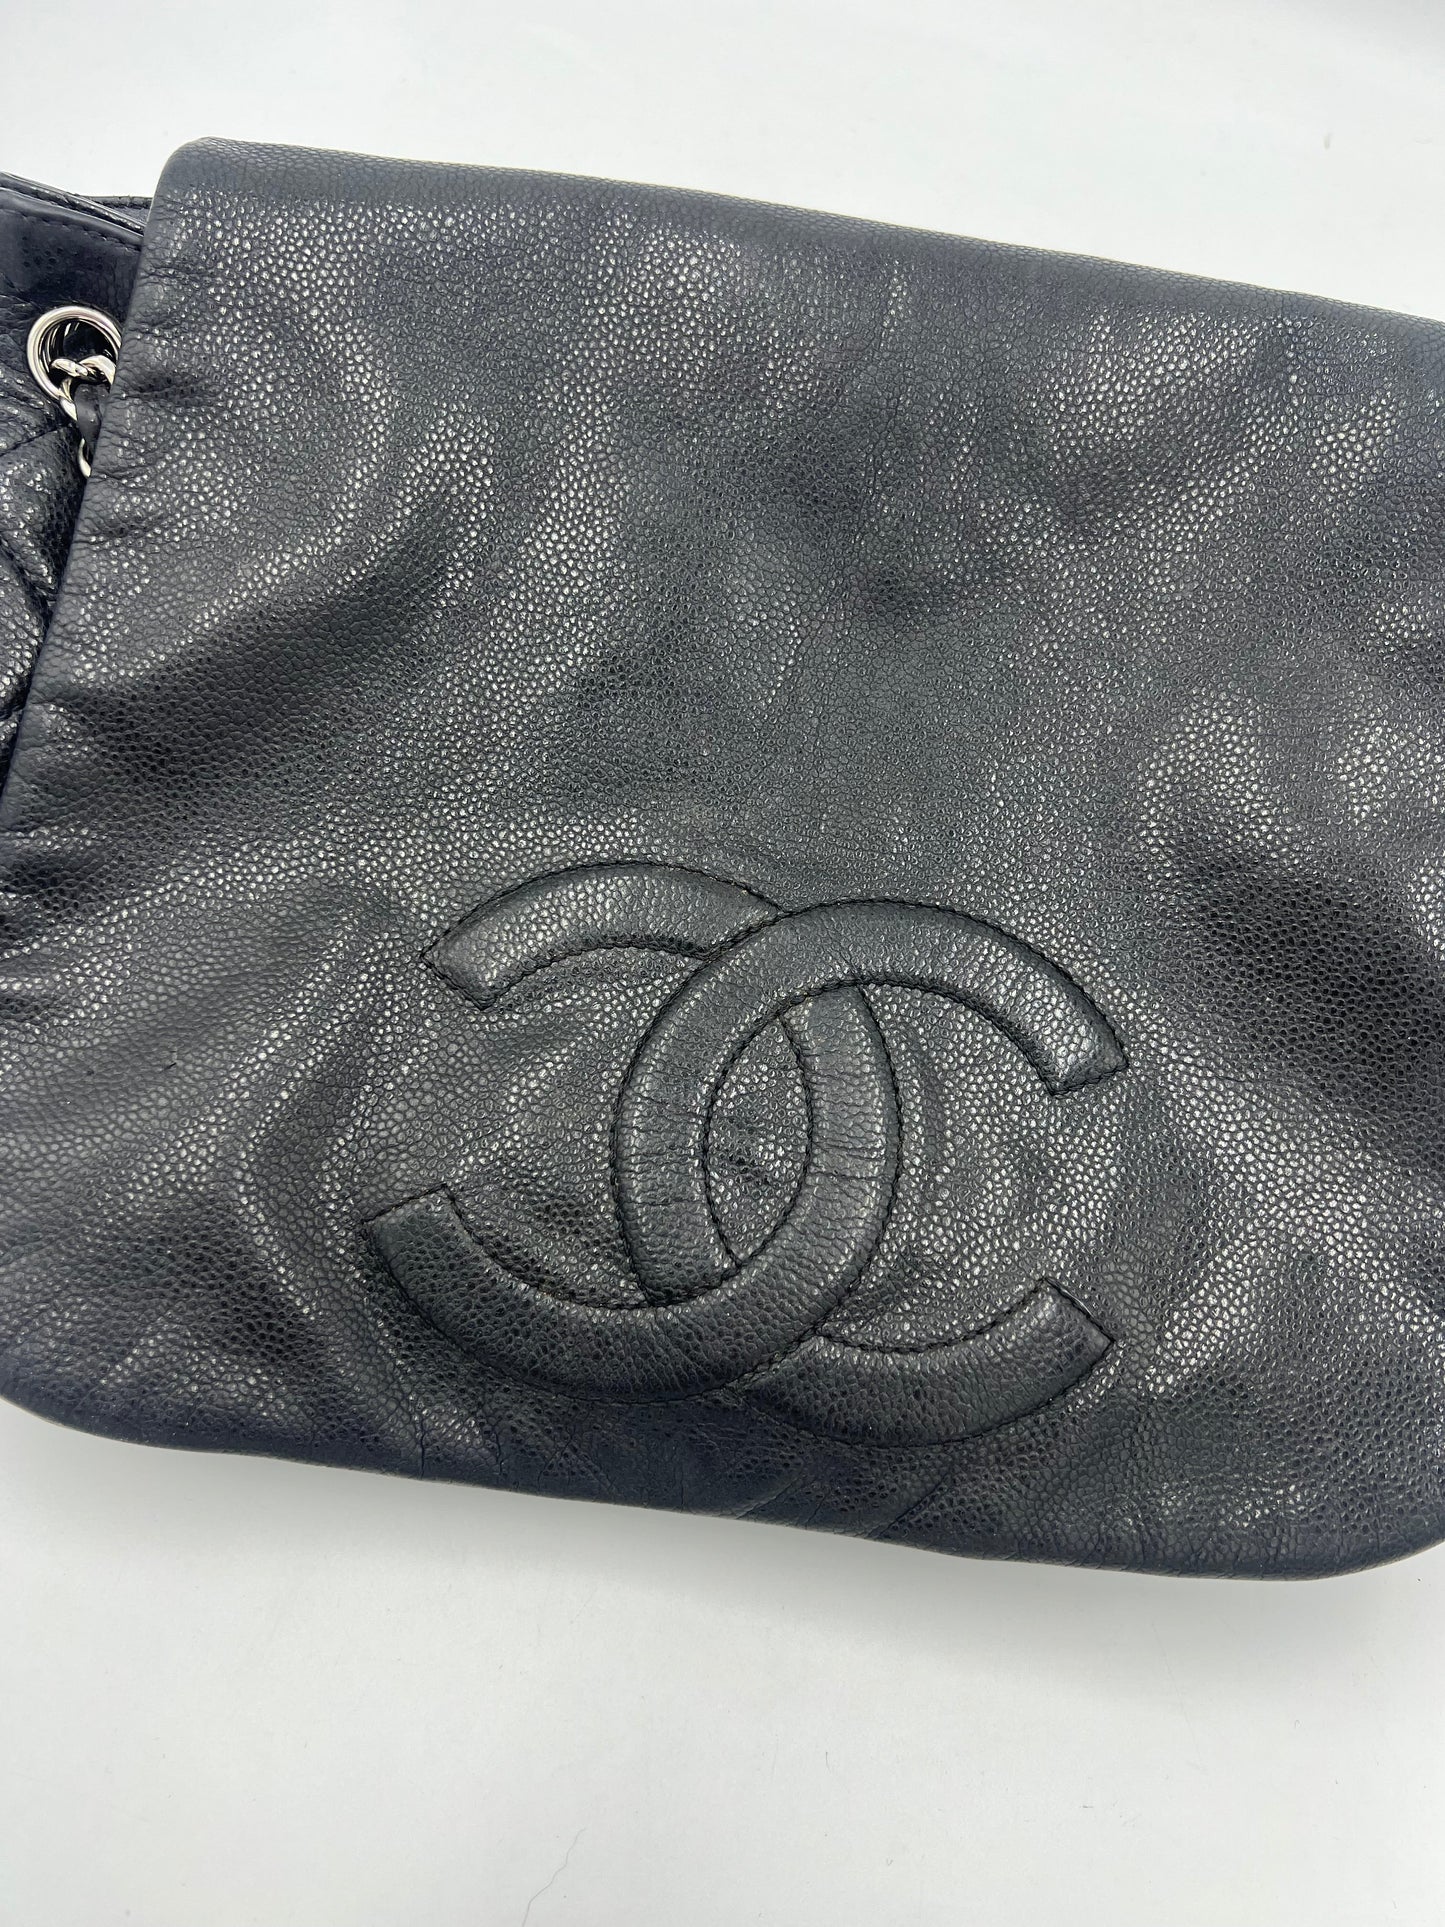 Chanel Caviar Leather Timeless CC Flap Handbag